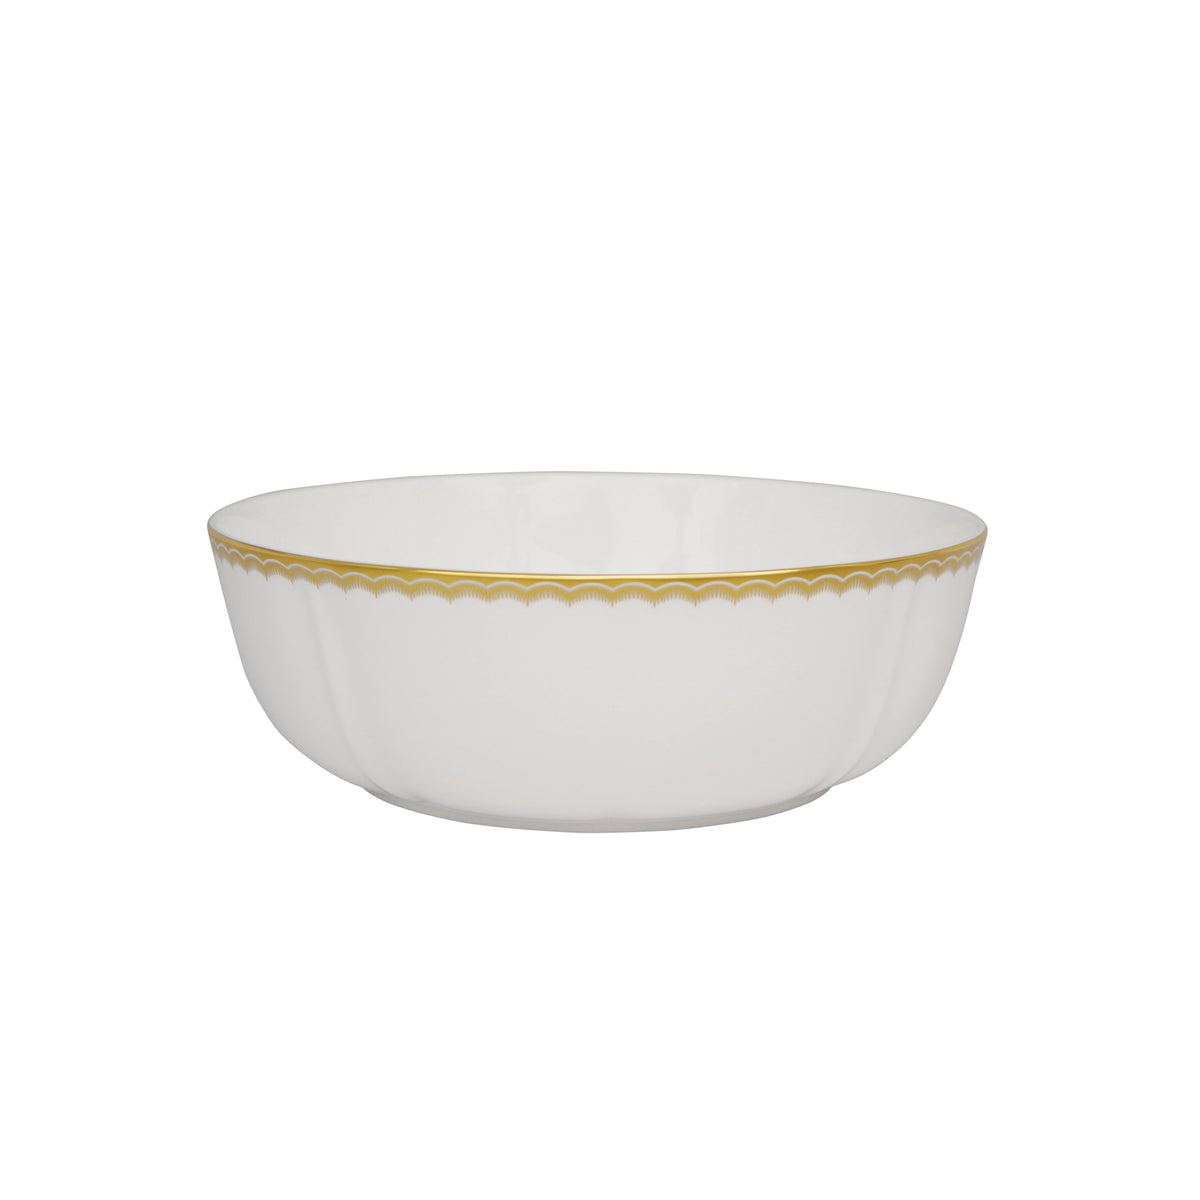 Antique Gold - Serving Bowl